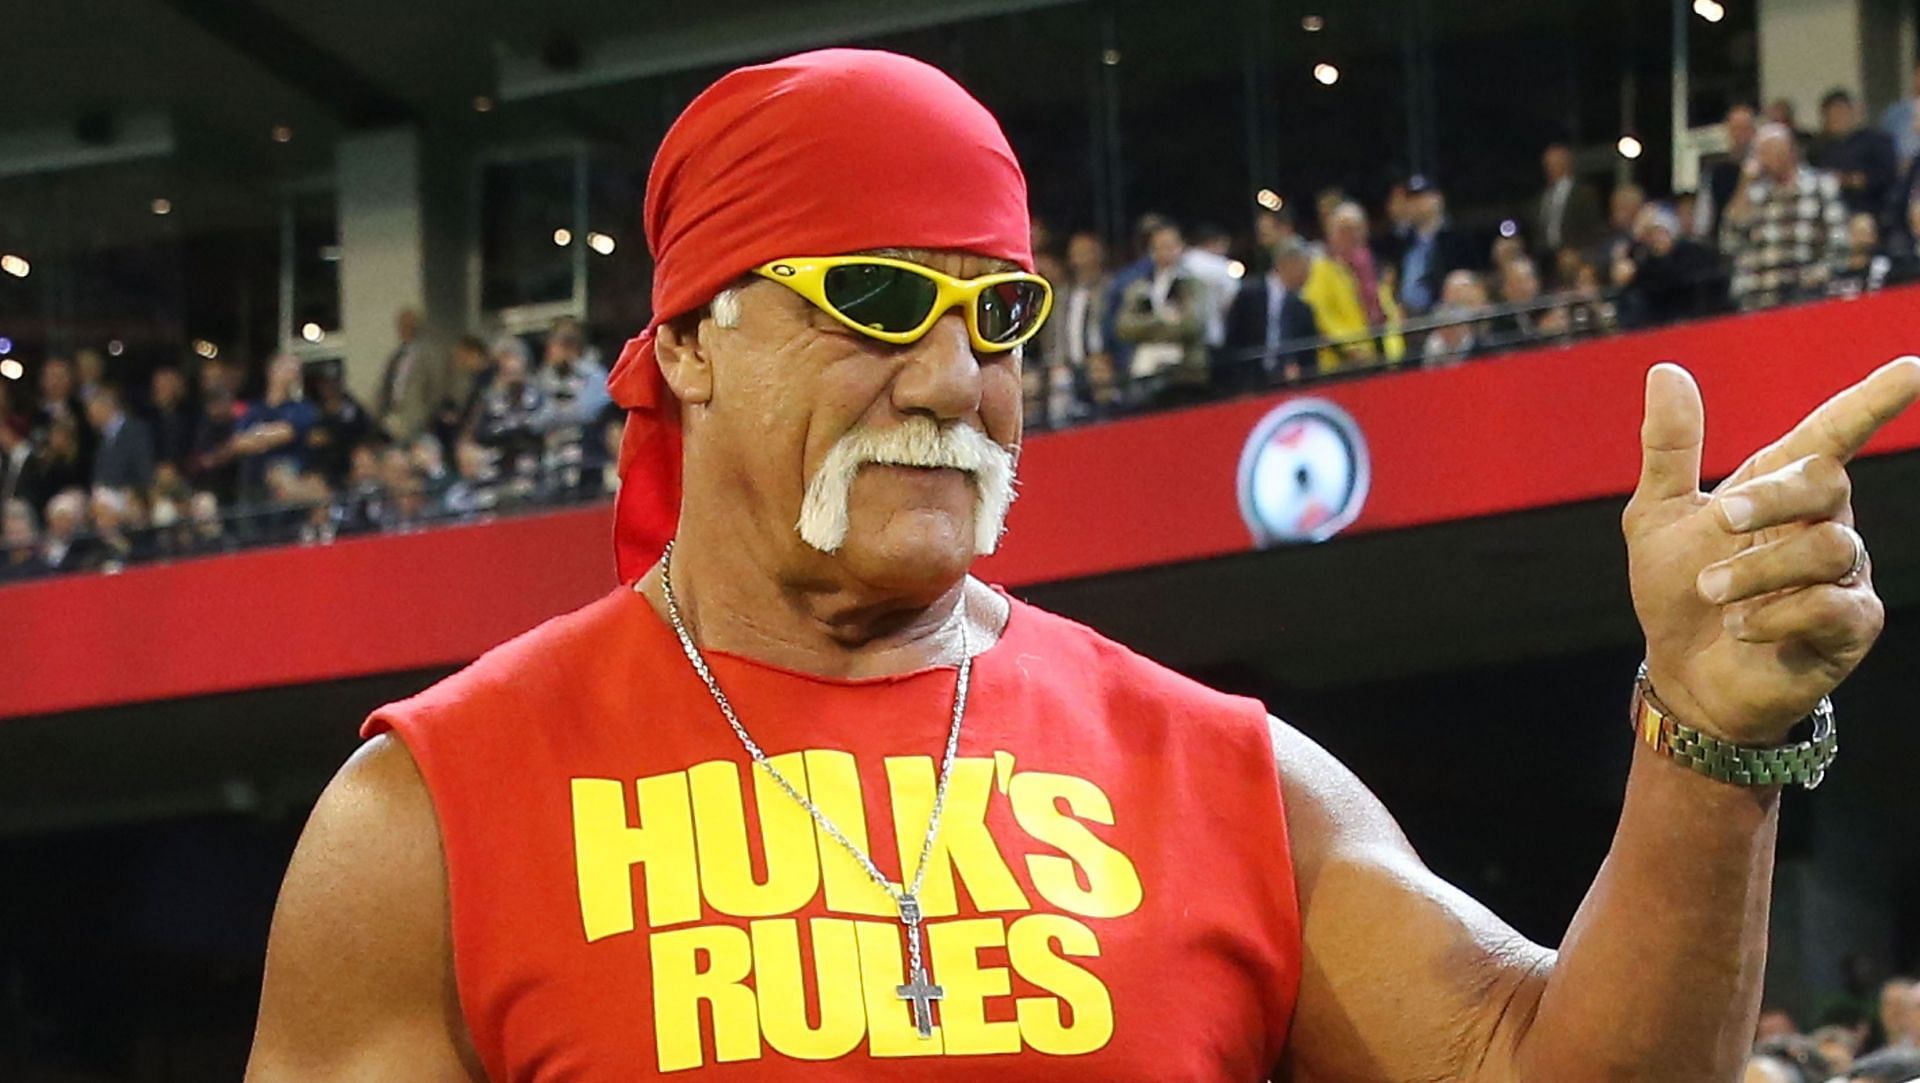 Hulk Hogan is a certified WWE legend